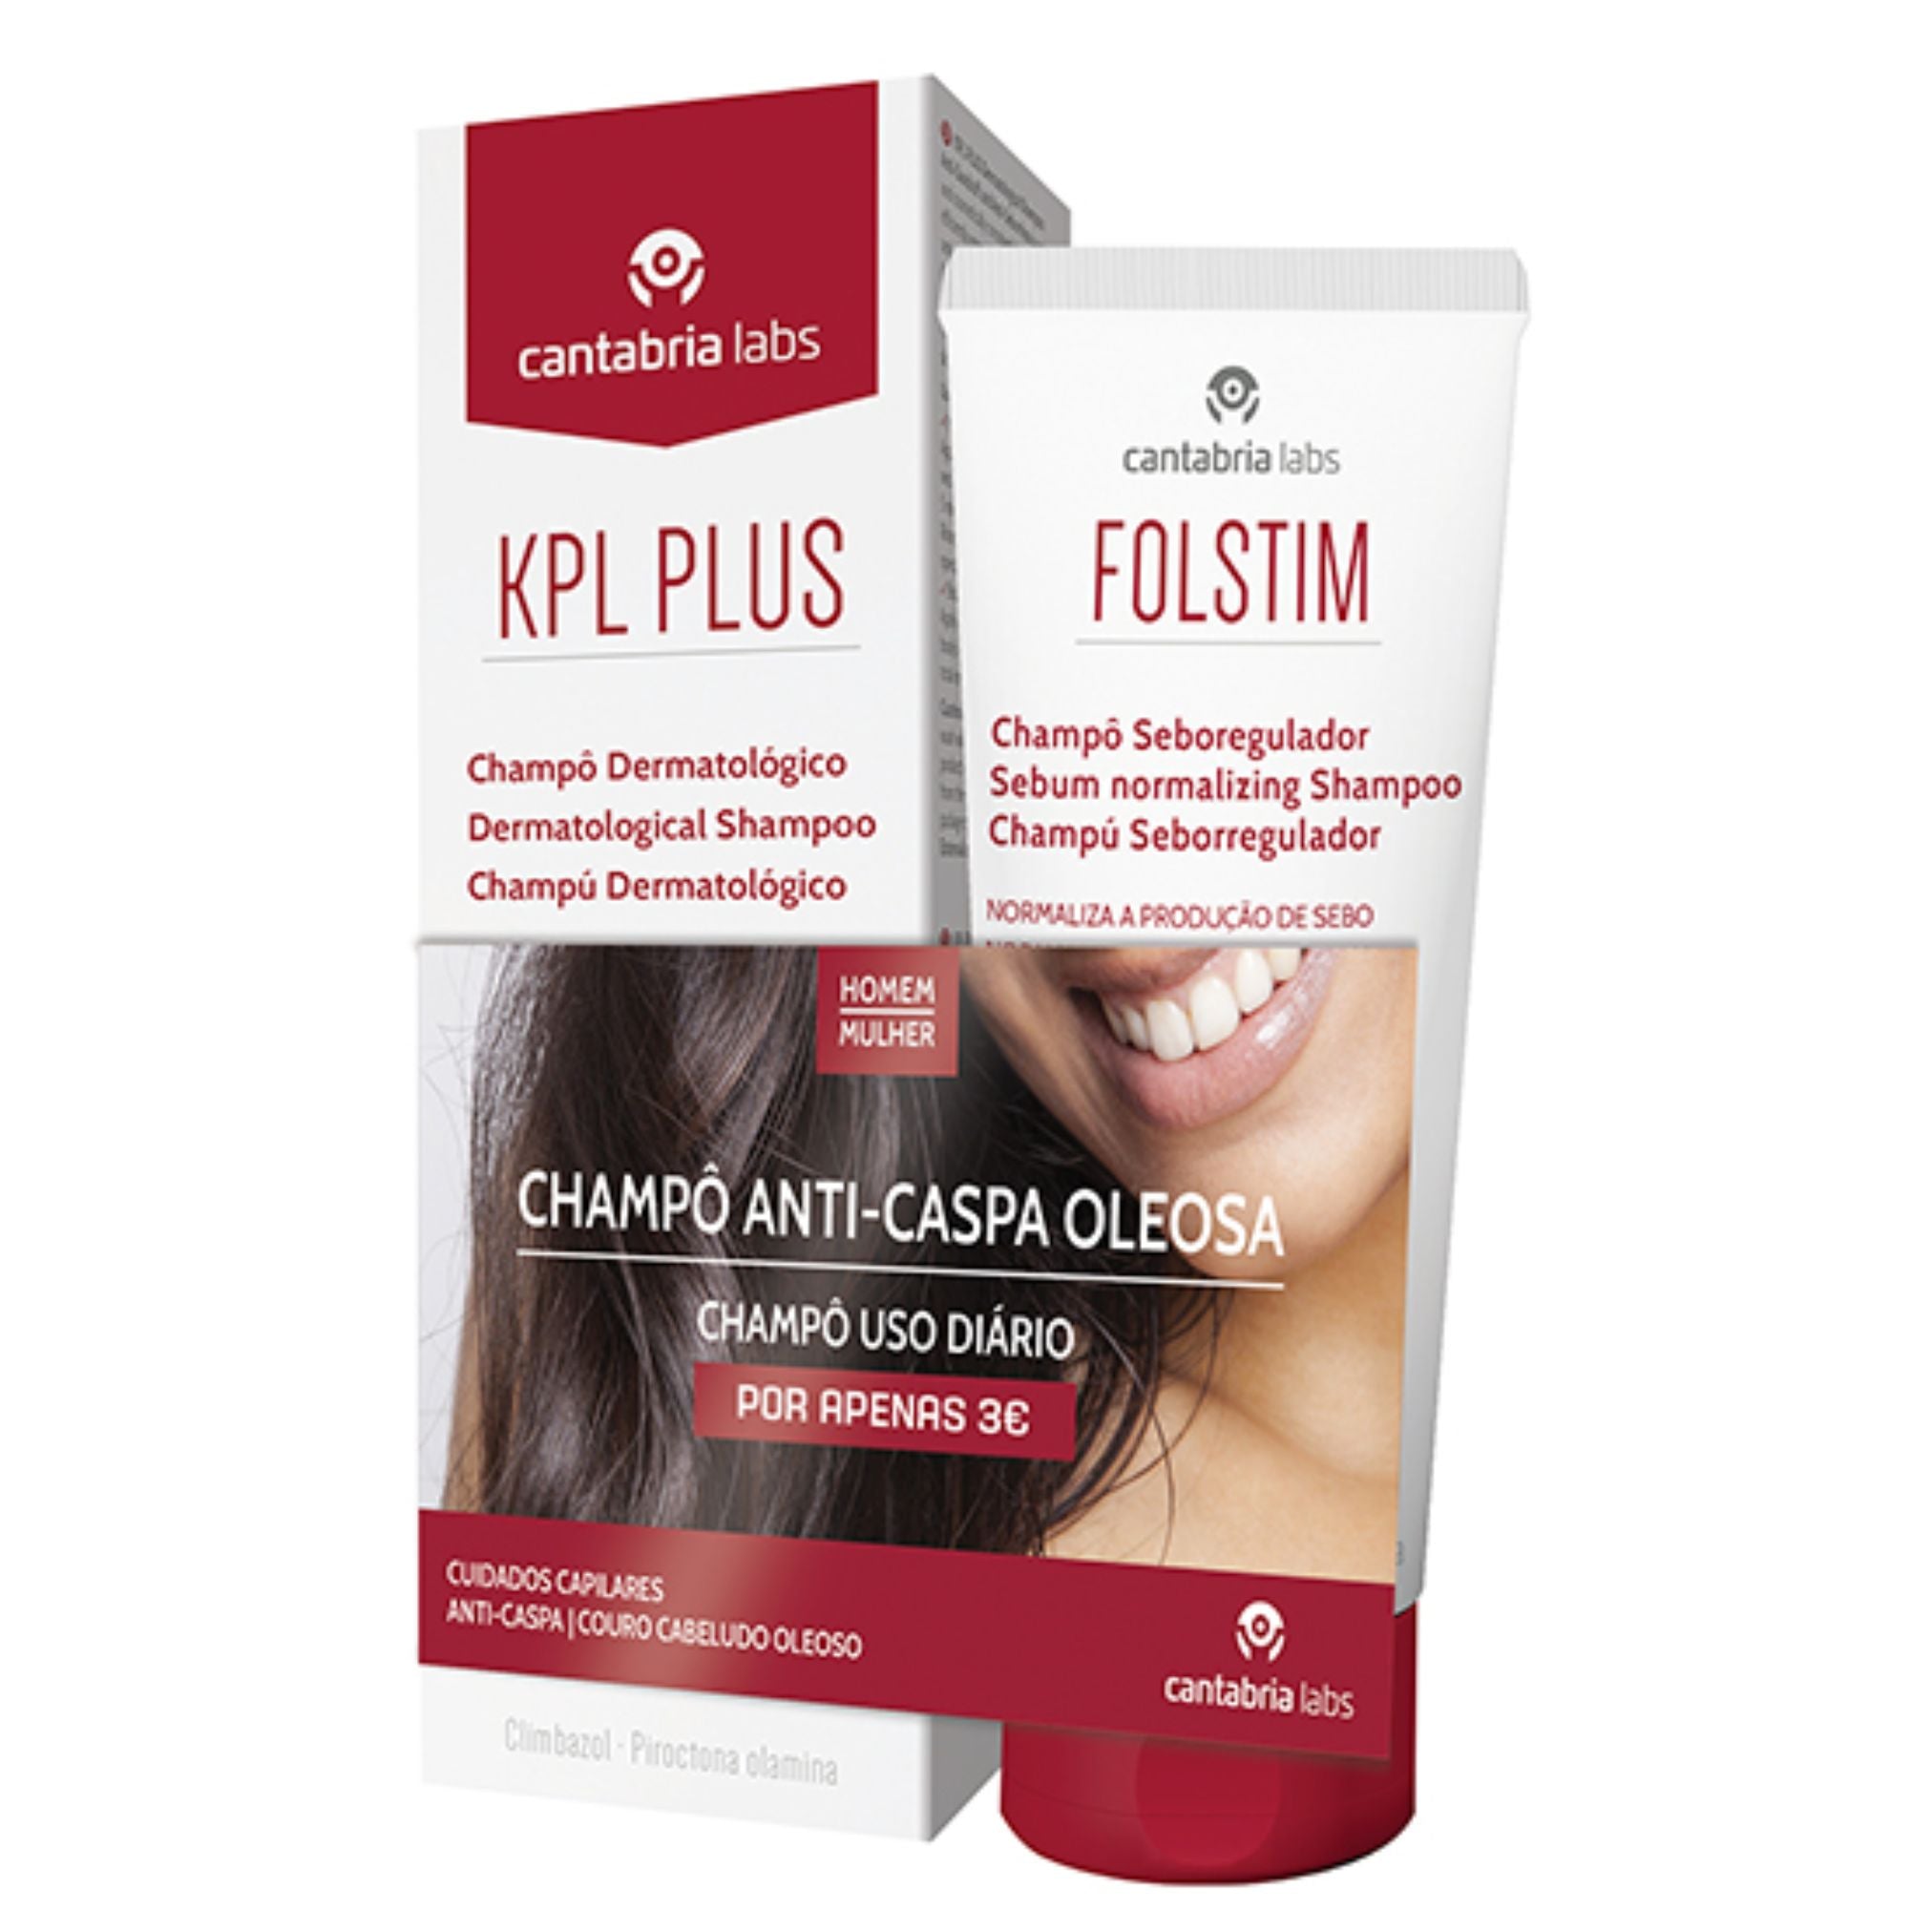 KPL Plus Dermatological Shampoo 200ml + Folstim pHysio Shampoo 200ml